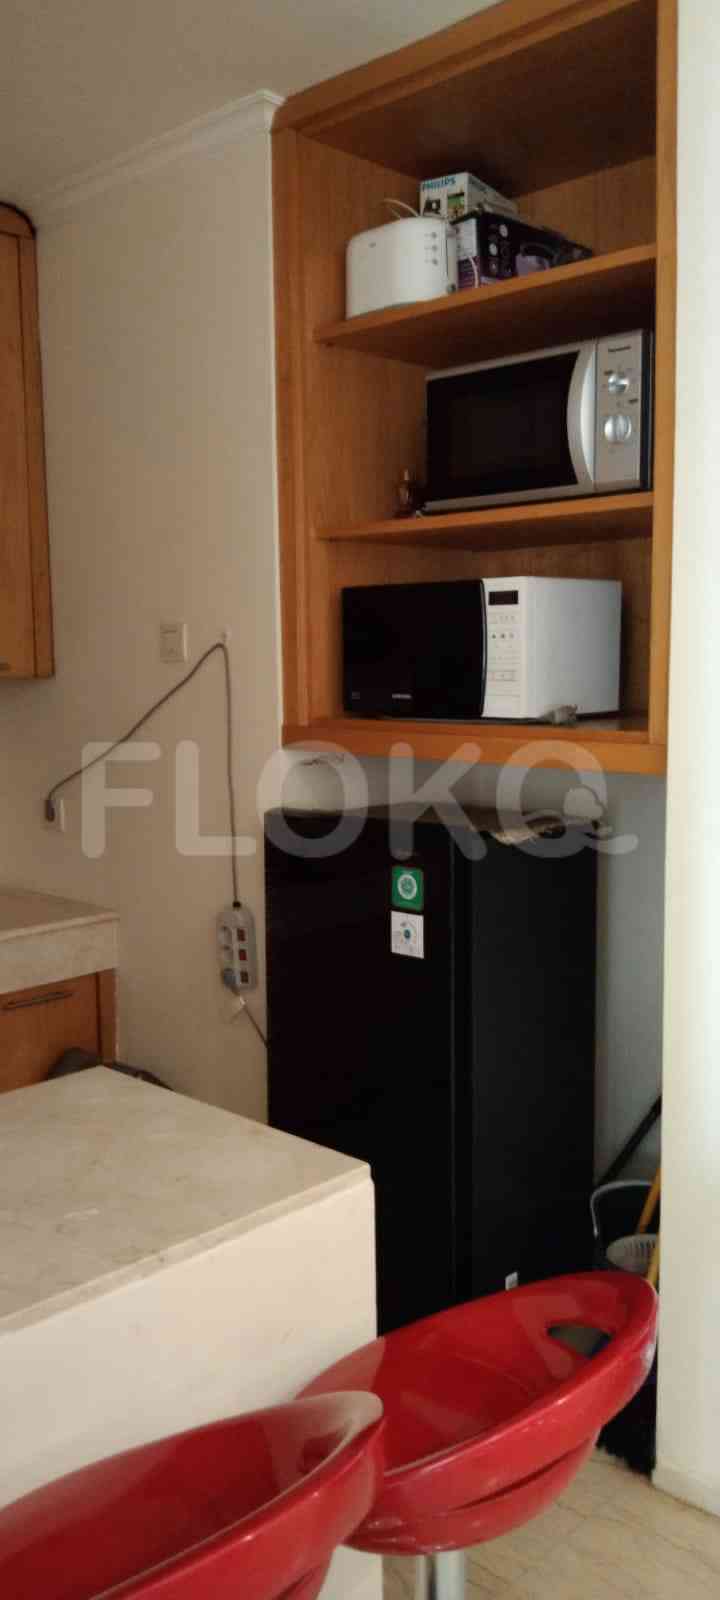 2 Bedroom on 15th Floor for Rent in FX Residence - fsu559 11